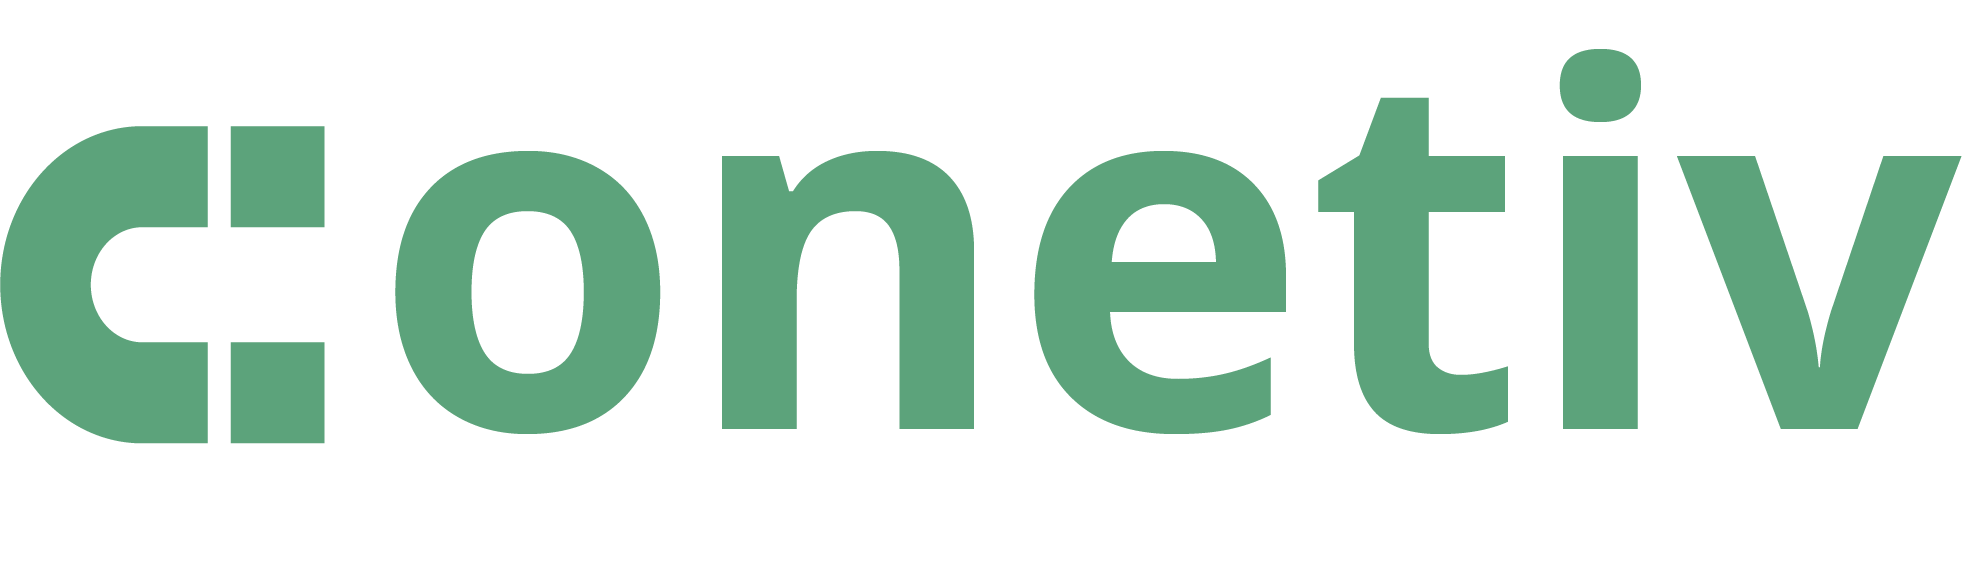 conetiv logo